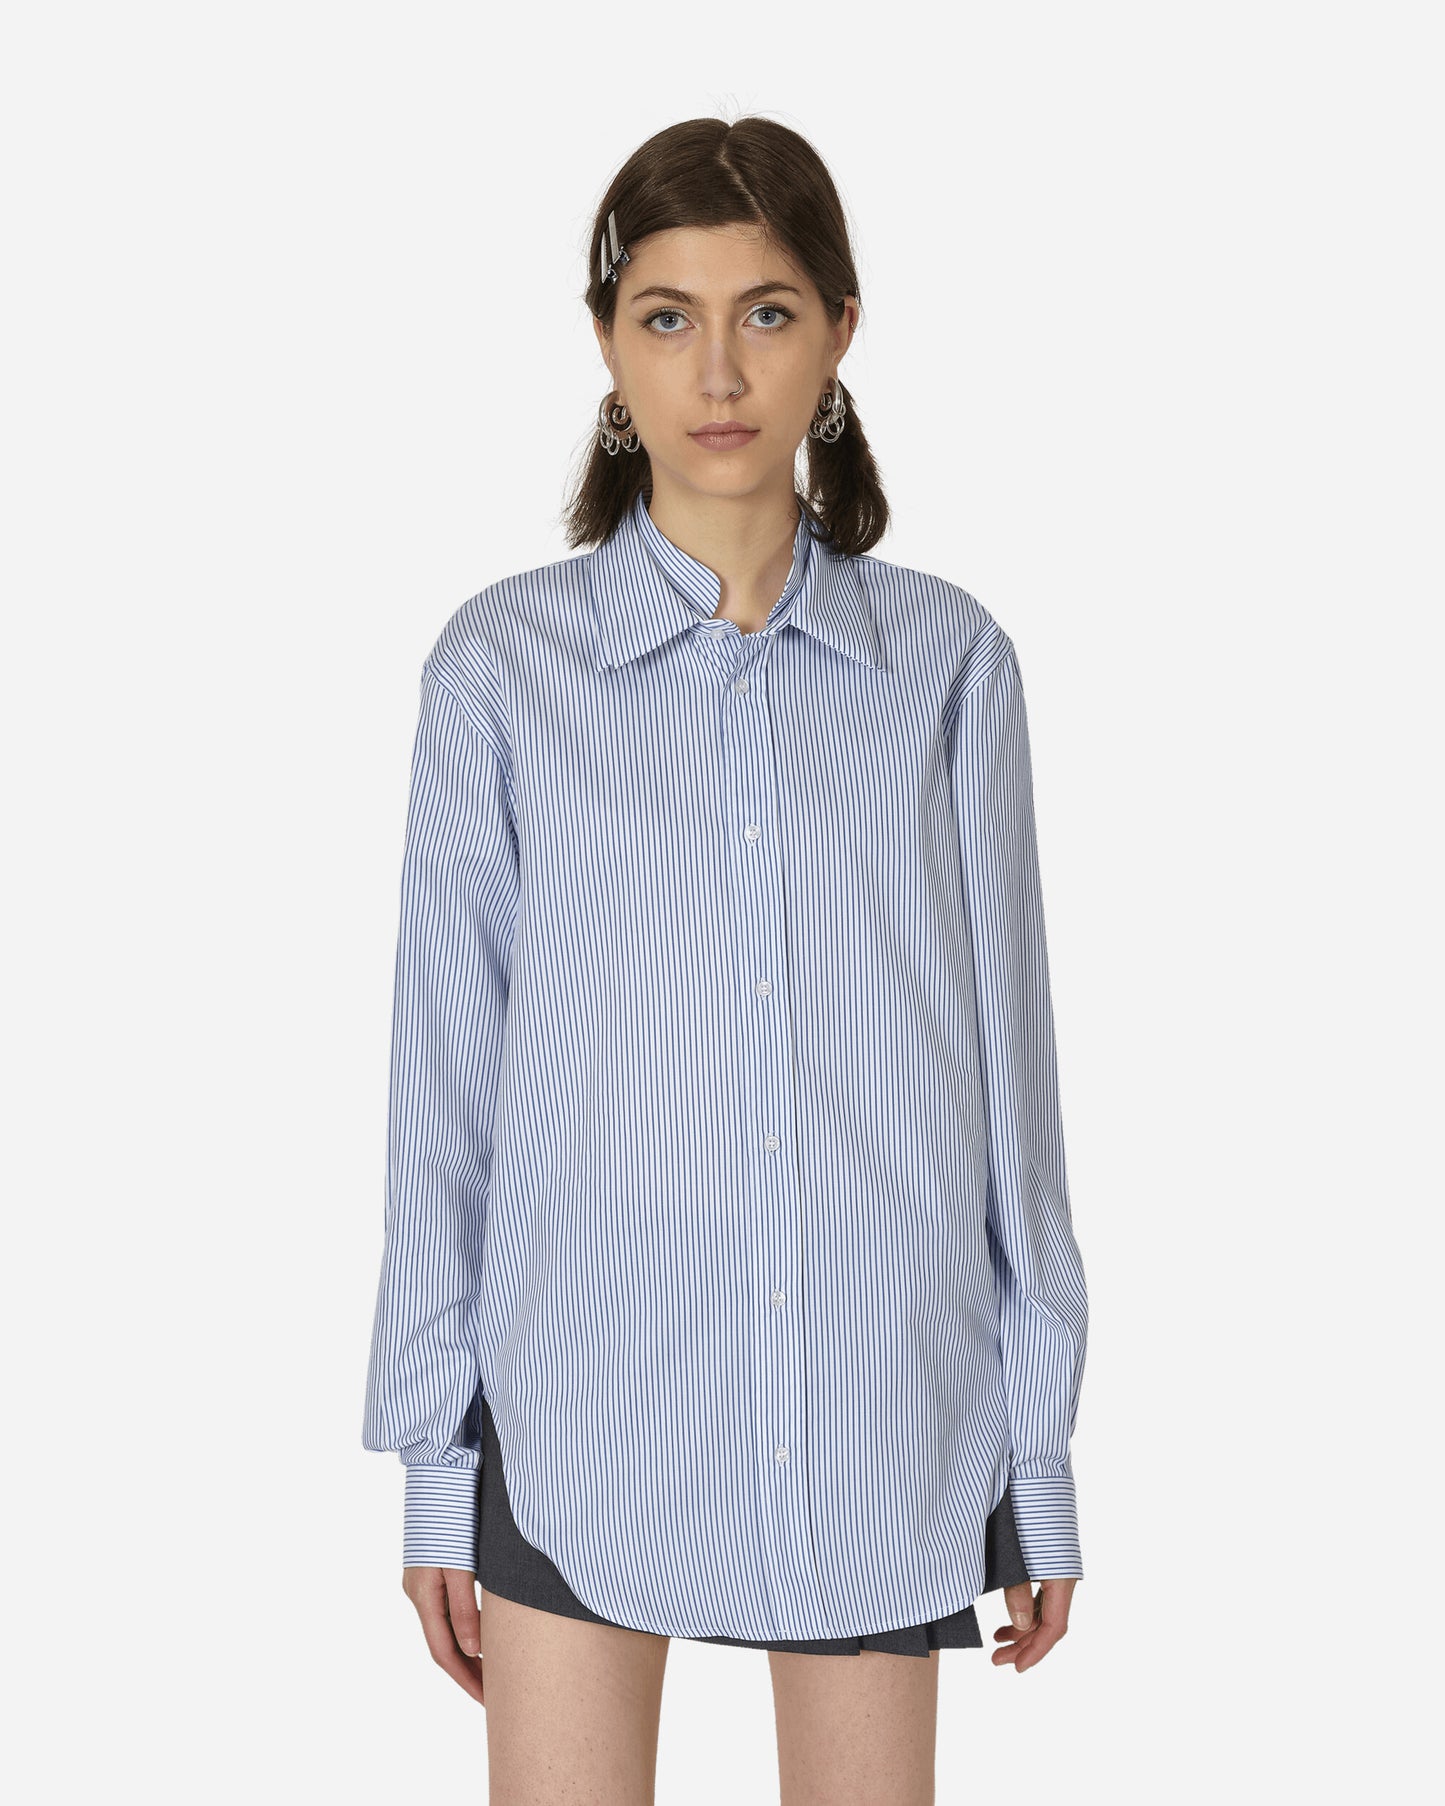 _J.L-A.L_ Triple Collar Shirting White Blue Stripe Shirts Longsleeve JBMW056FA48 WTH0007